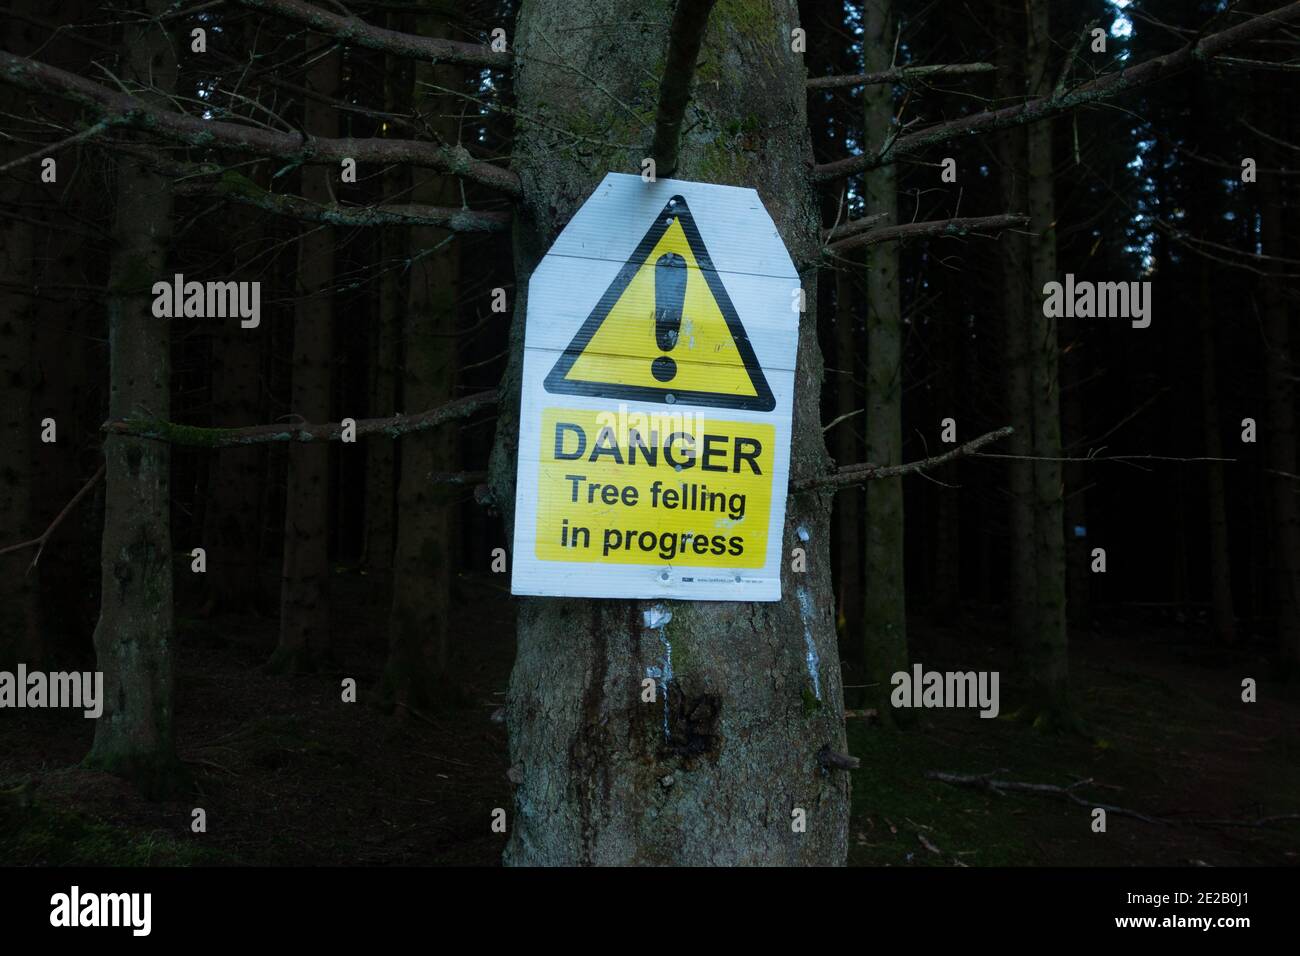 Danger Tree felling in progress warning sign - Scotland, UK Stock Photo